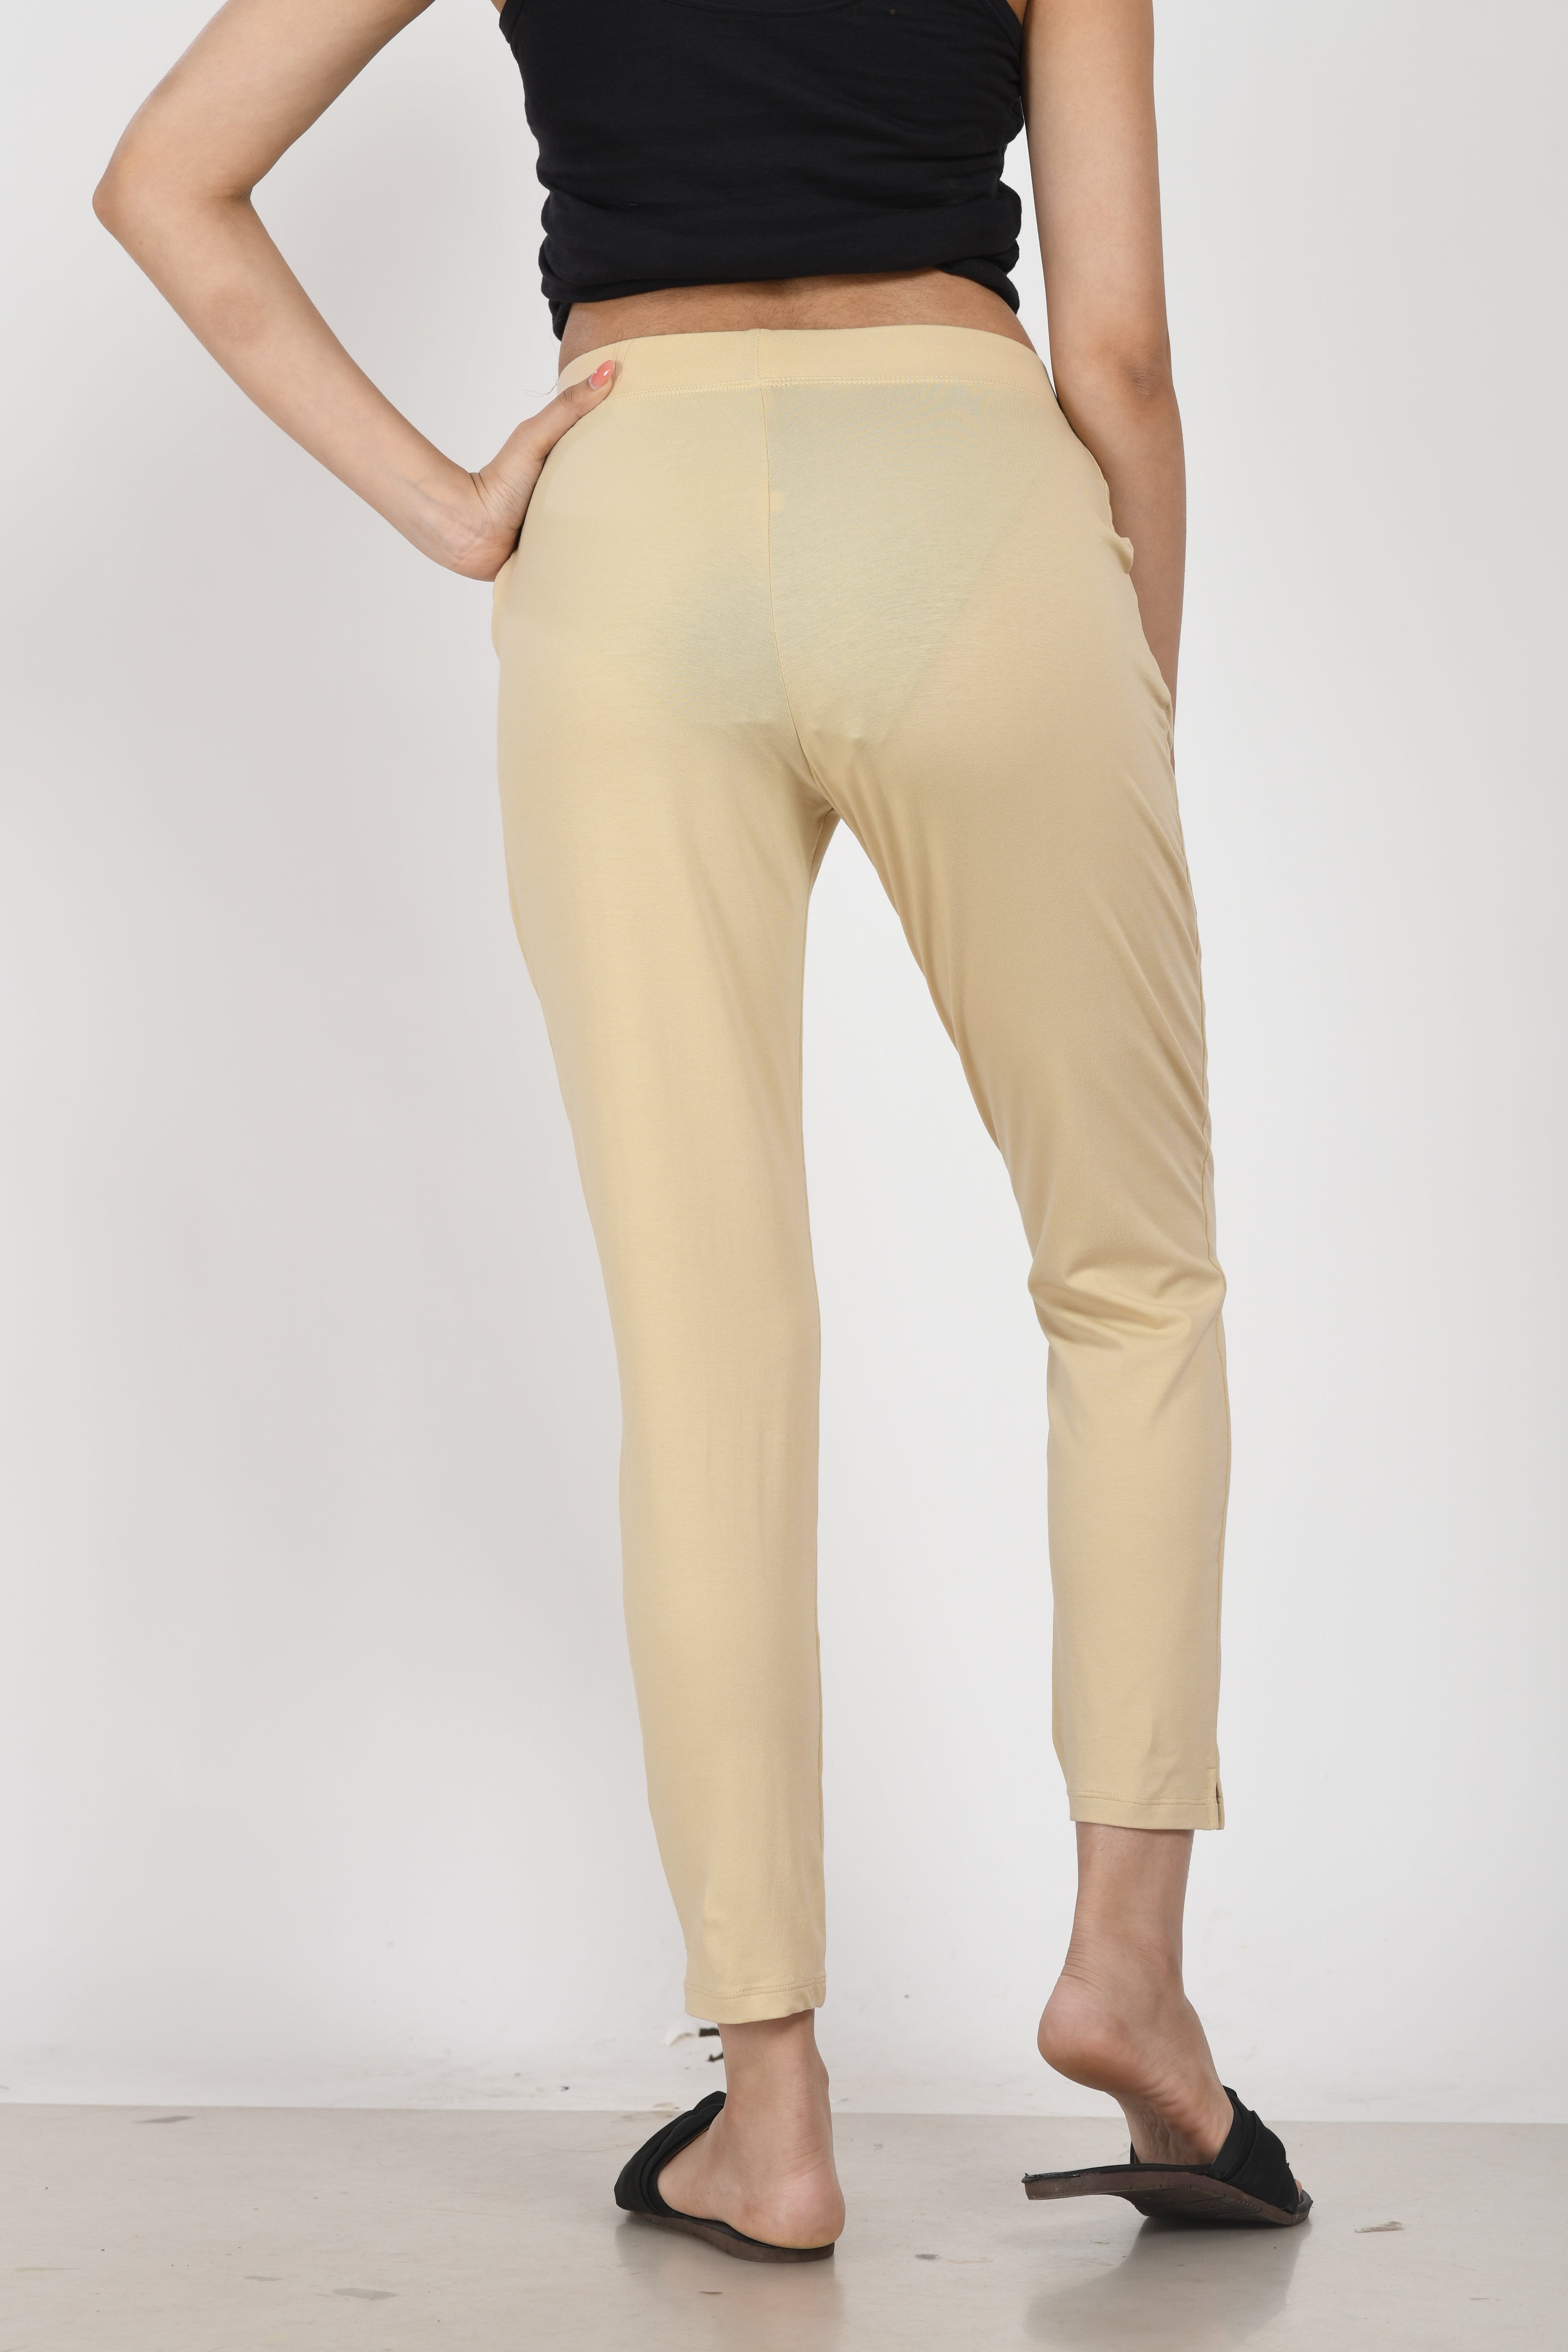 Buy Cream Trousers & Pants for Women by Jaipur Kurti Online | Ajio.com